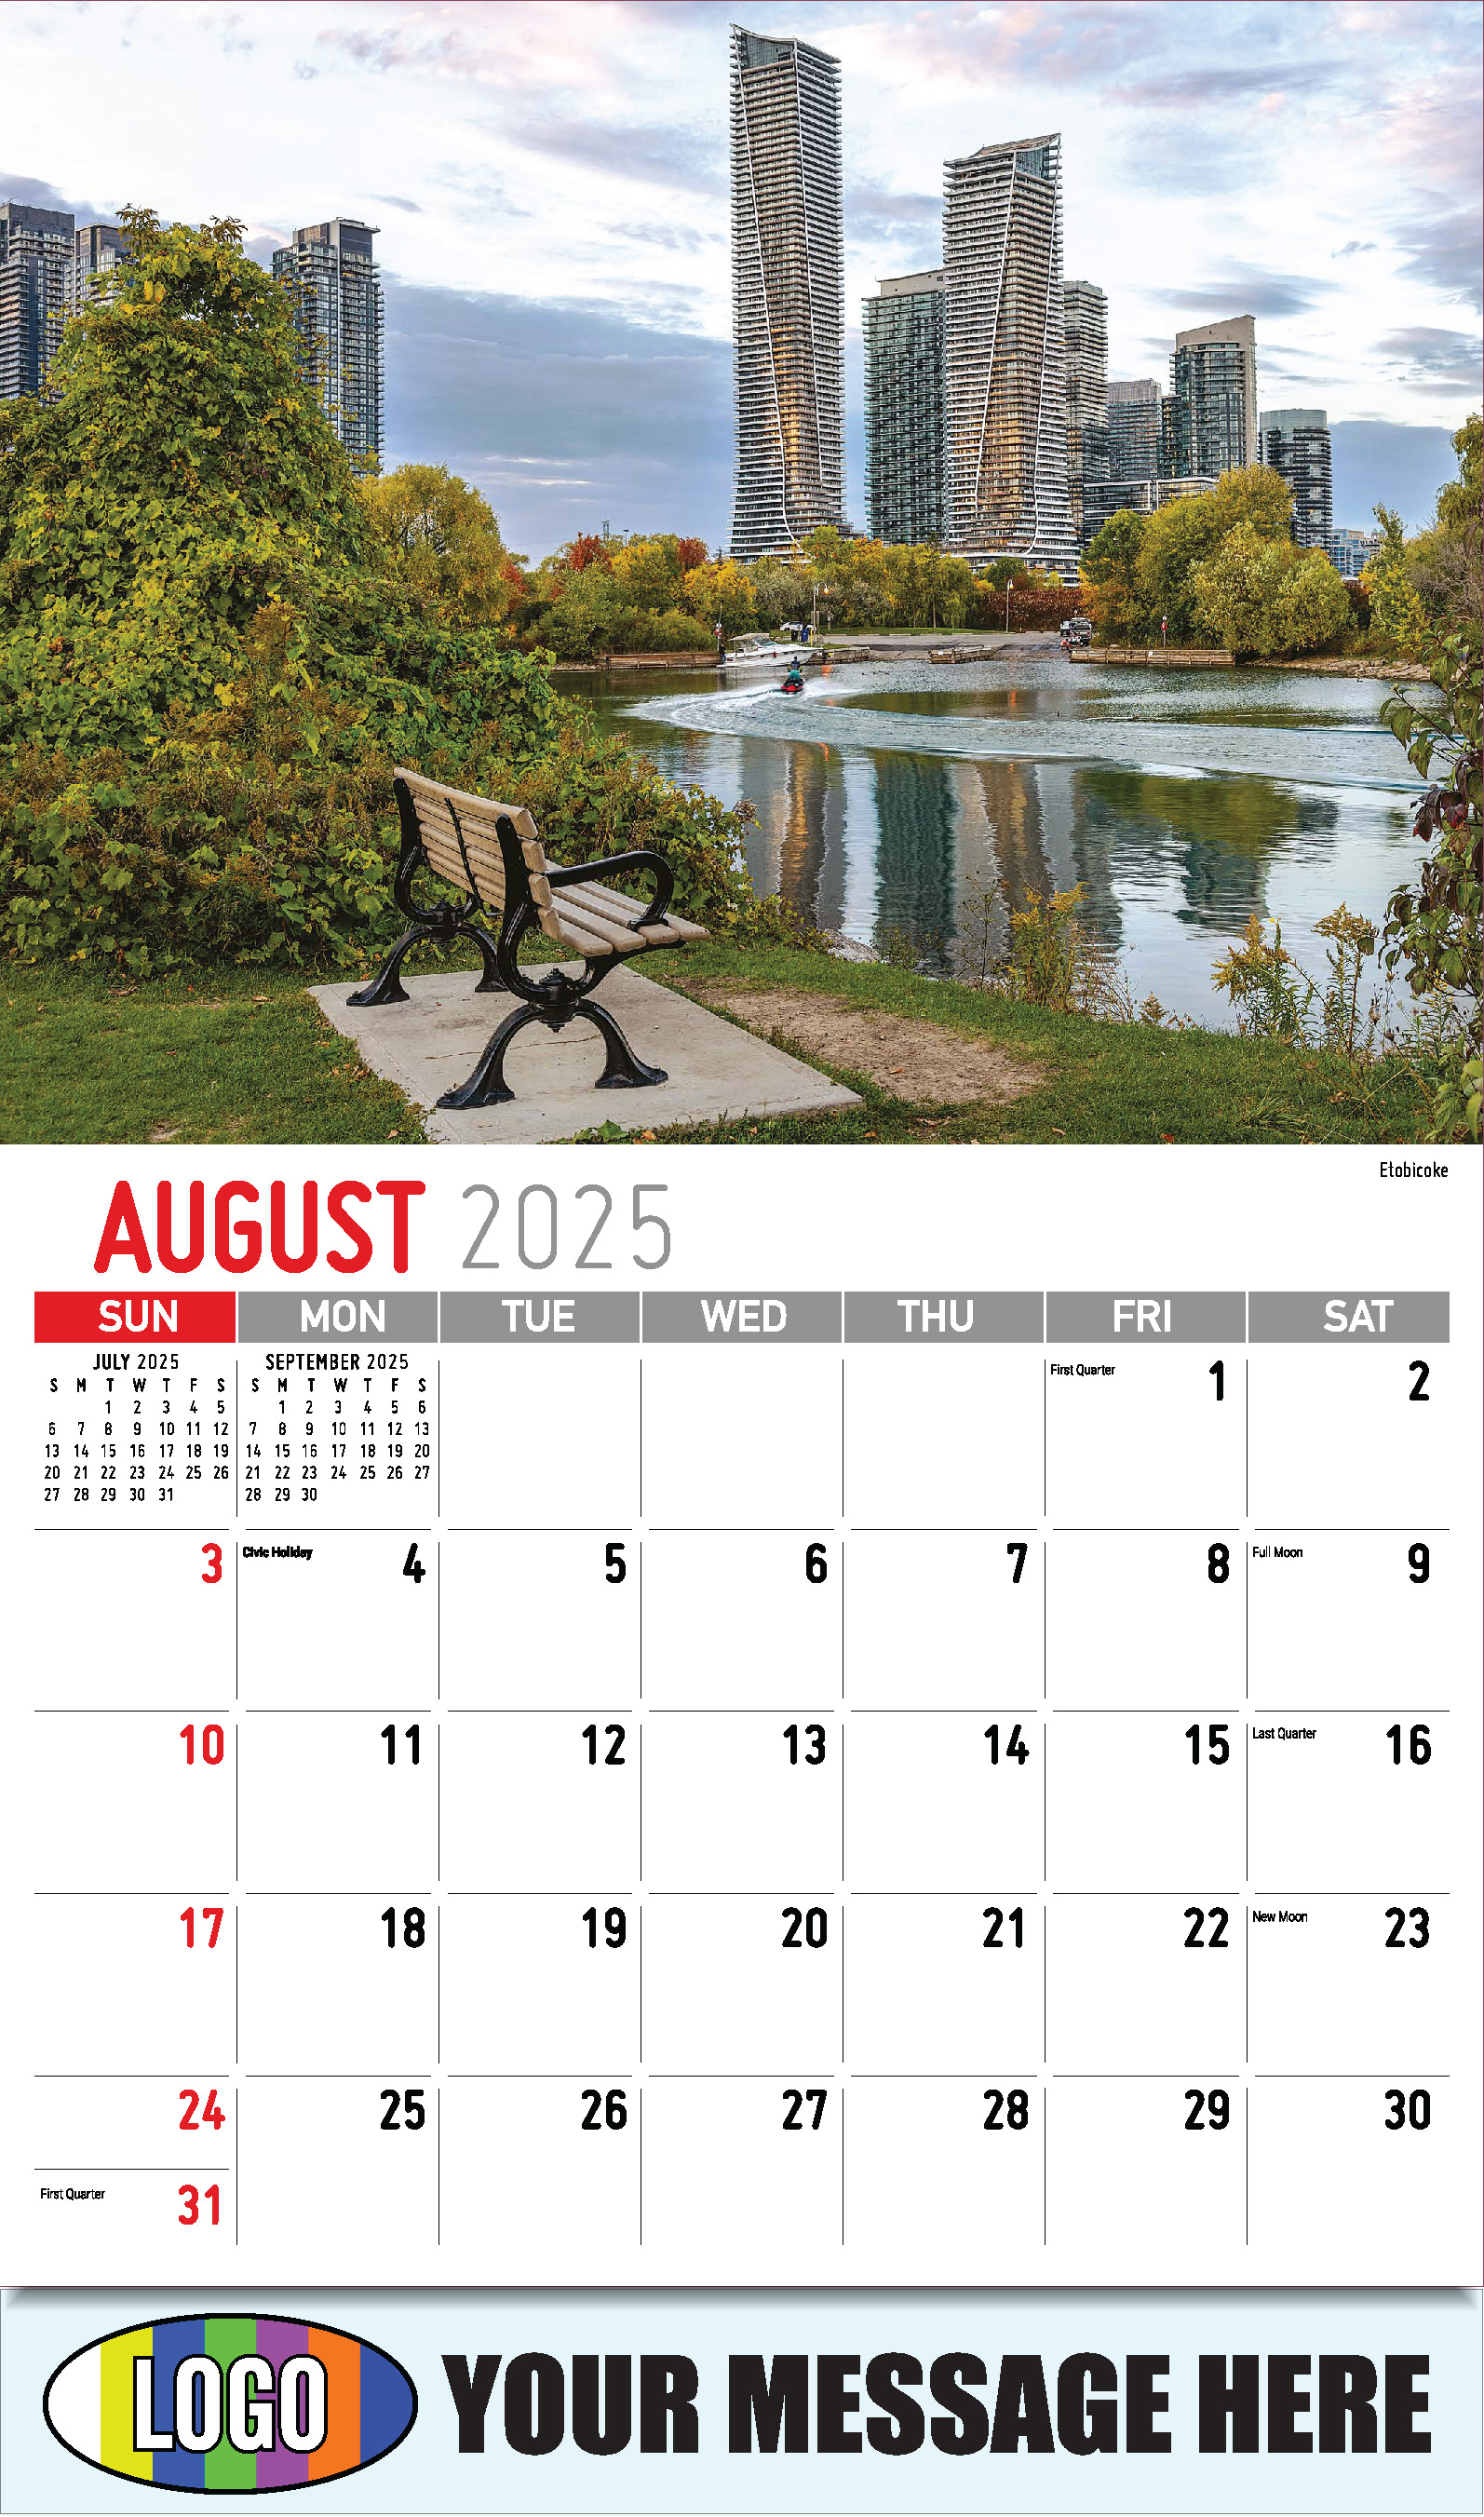 Scenes of Ontario 2025 Business Promo Wall Calendar - August